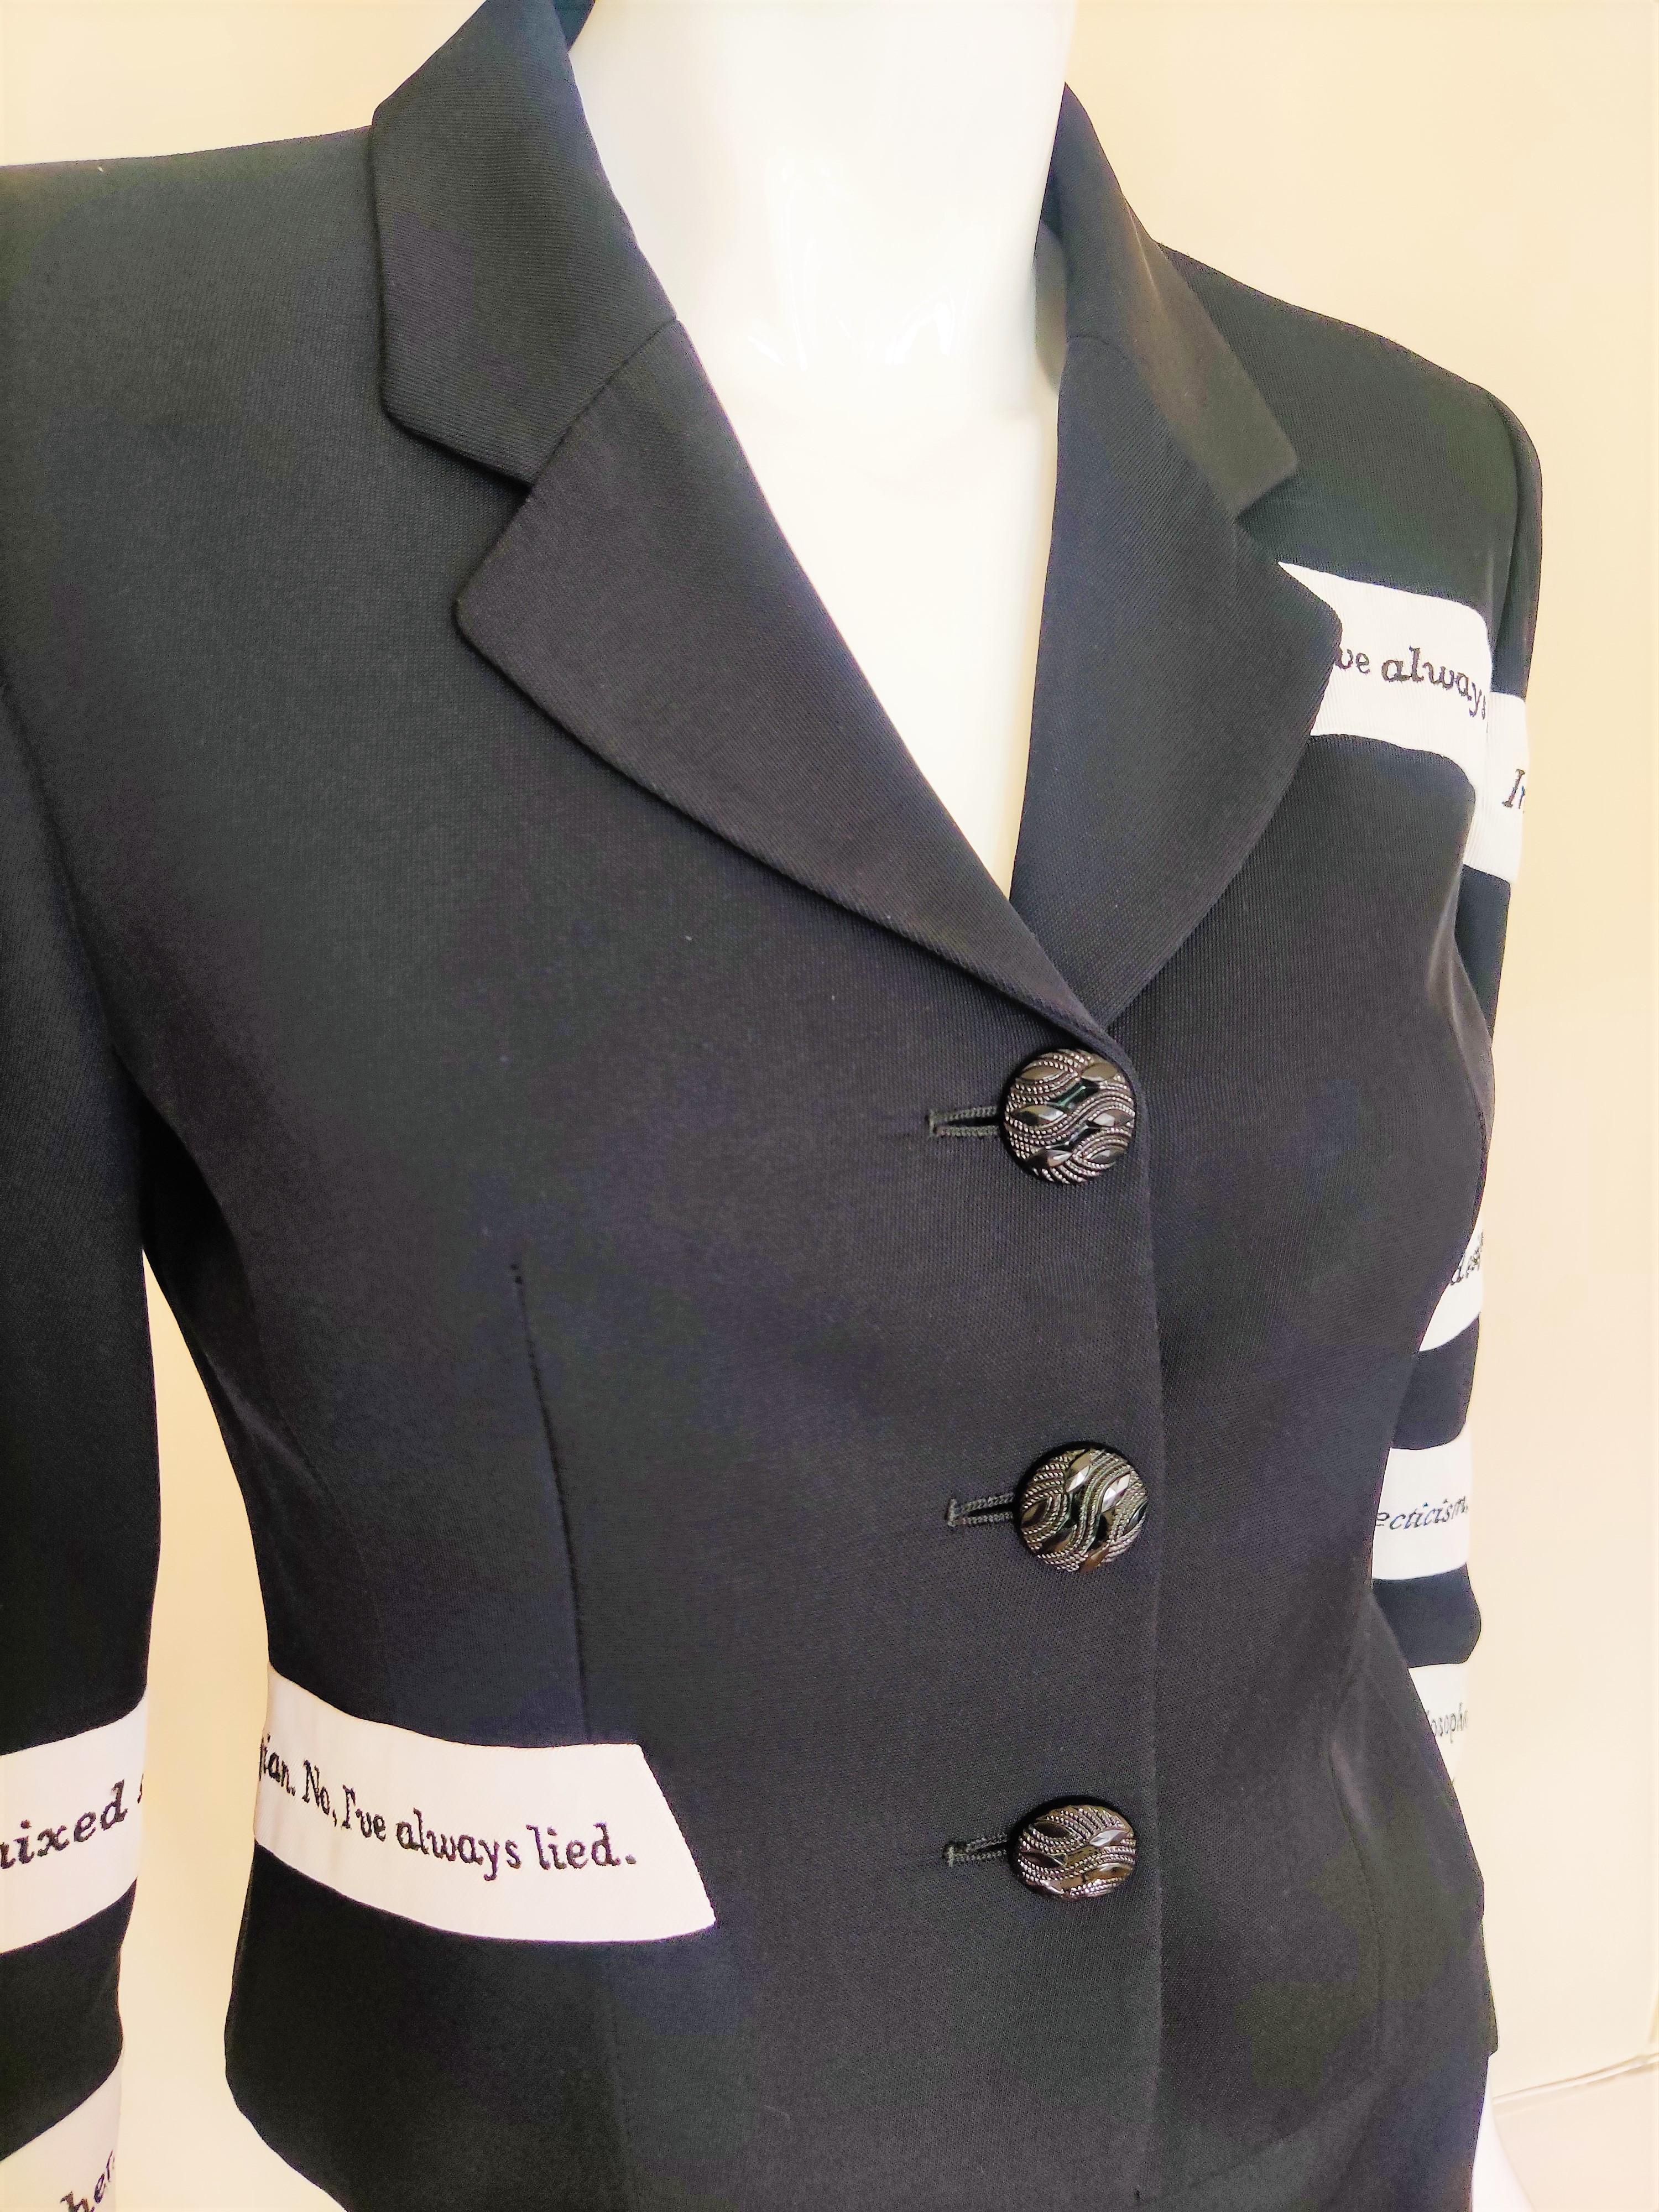 Moschino Cheap and Chic Irony Text Tape Vintage Couture Schwarz-Weißes Kleid Anzug im Angebot 2